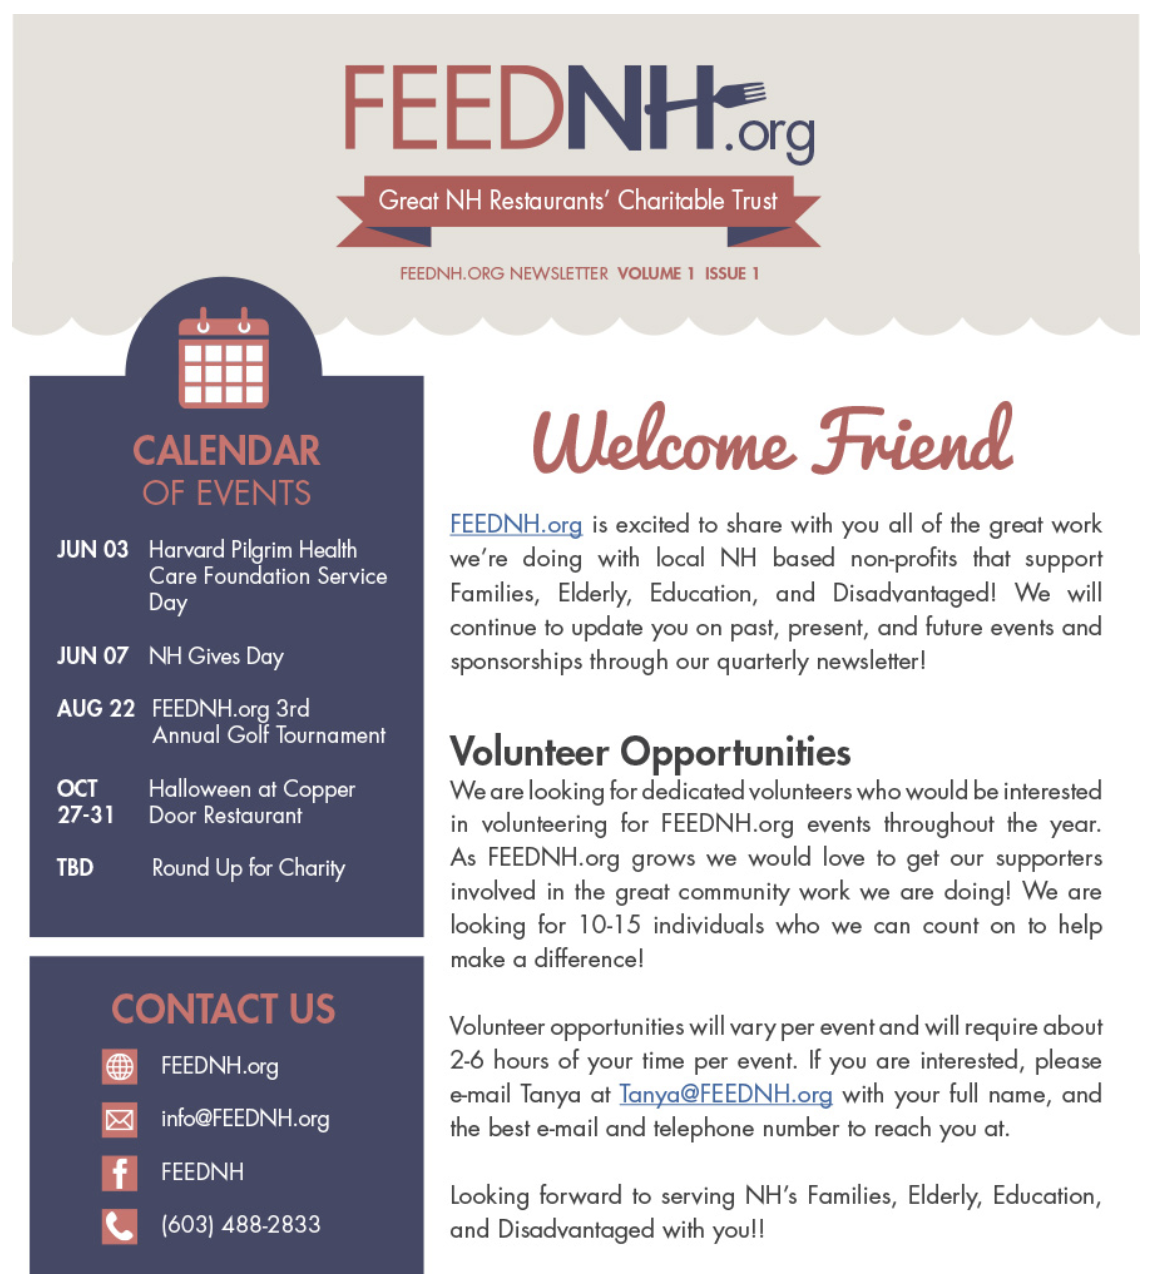 FEEDNH.org Newsletter Volume 1 Issue 1